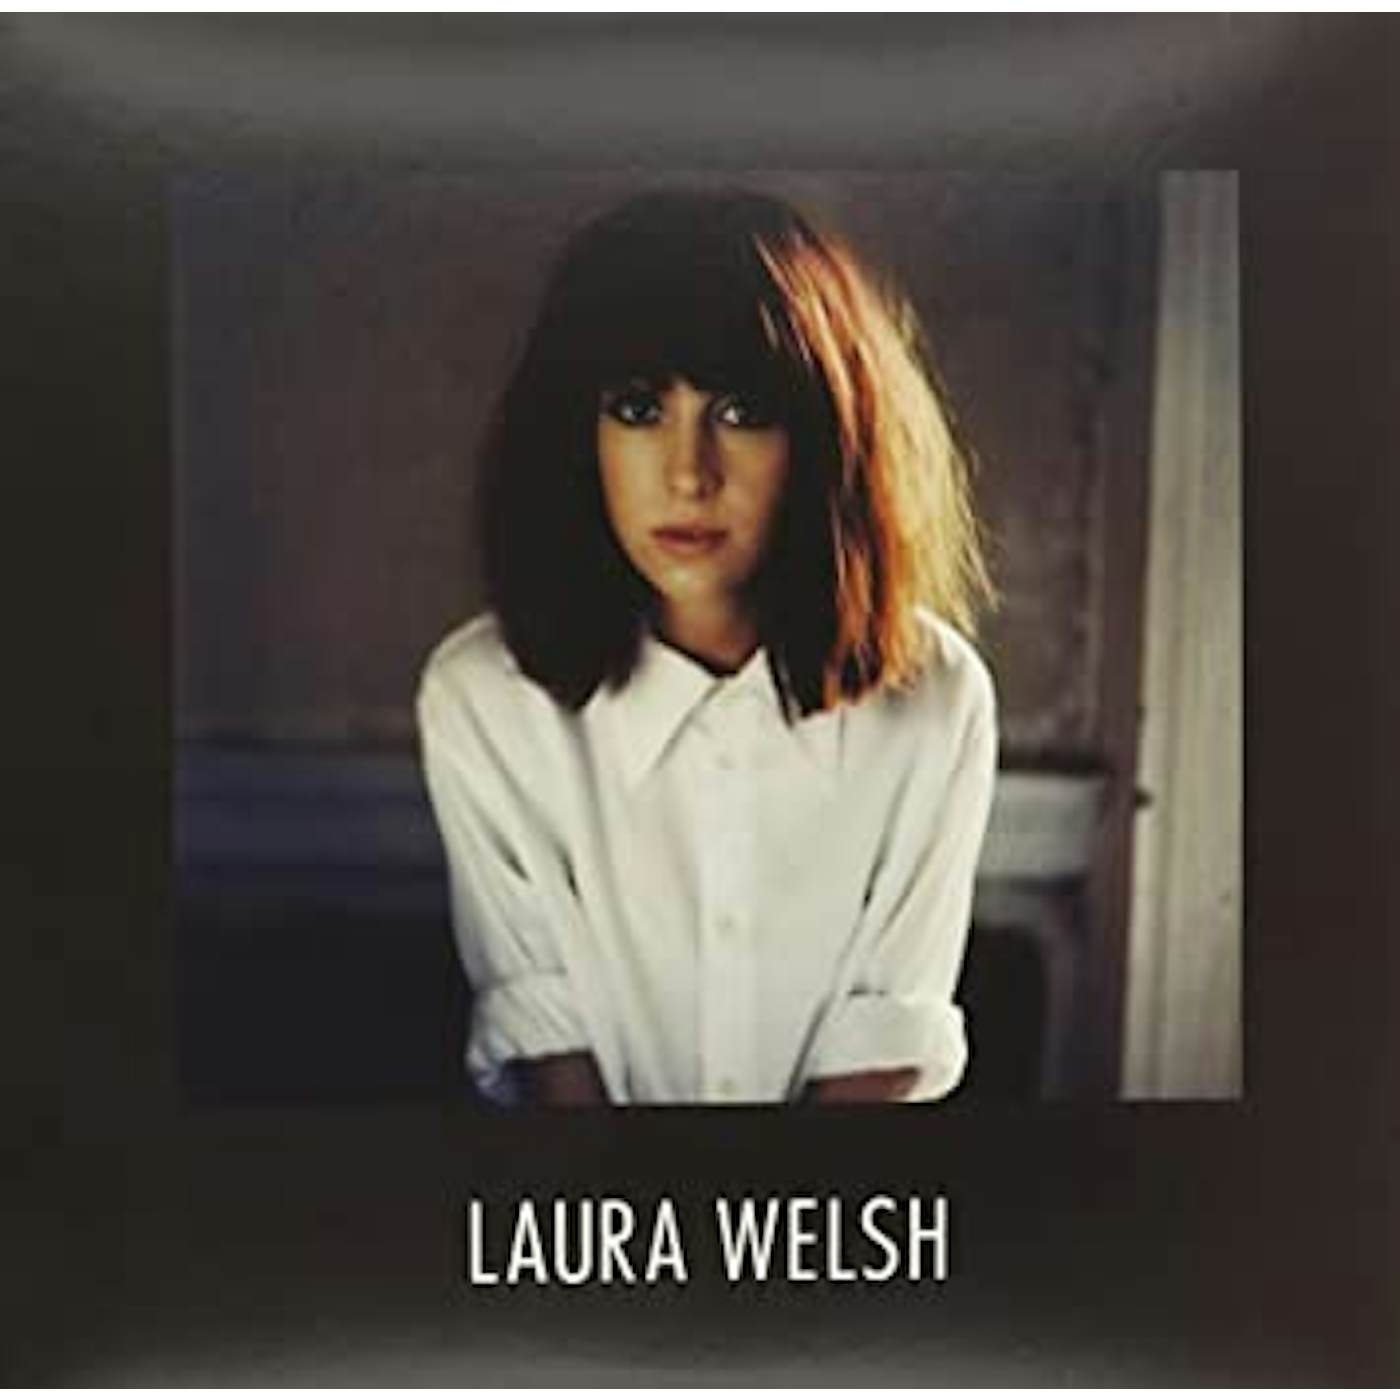 LAURA WELSH (EP) Vinyl Record